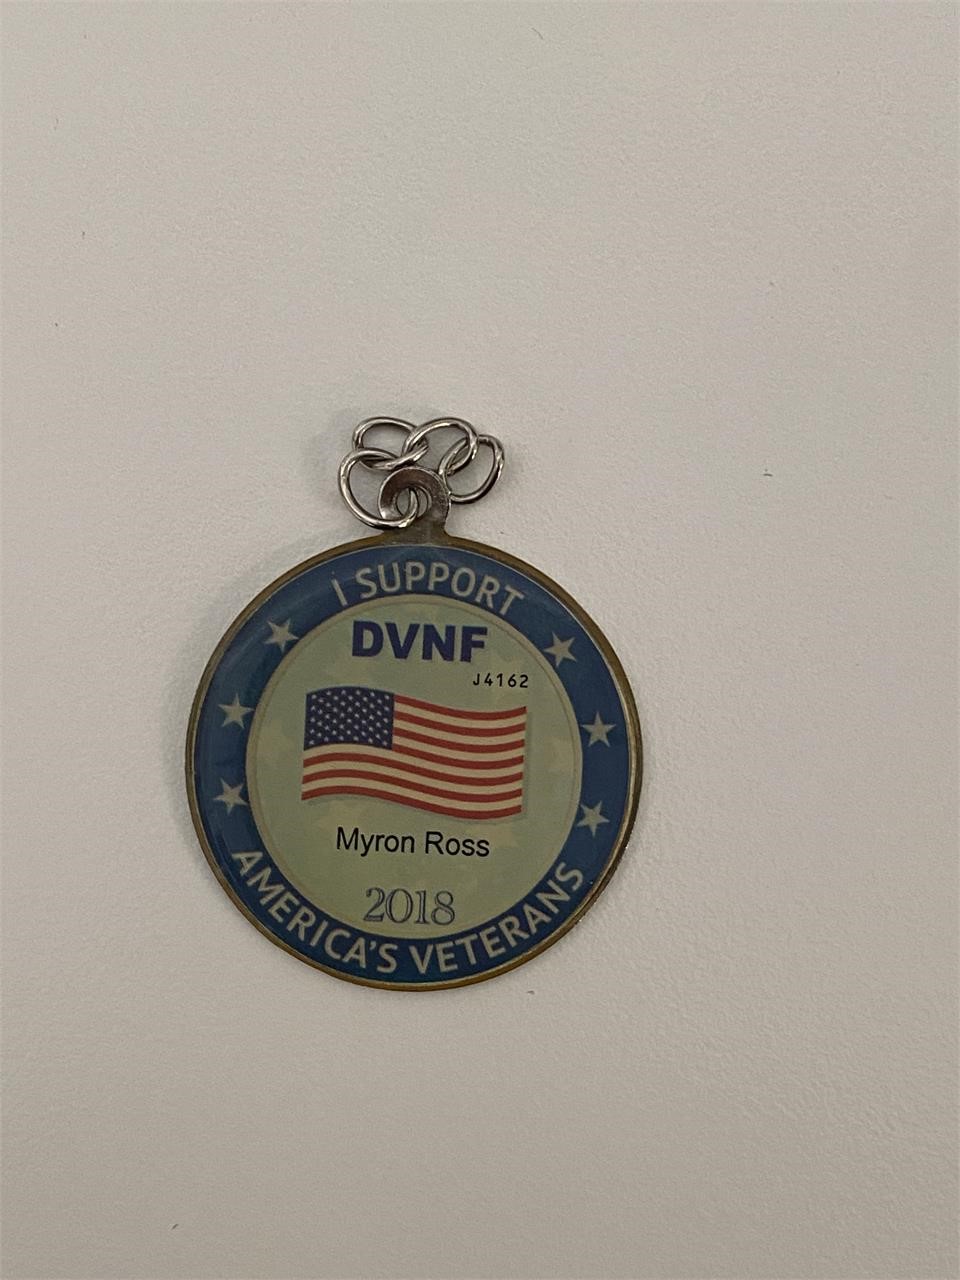 I Support America's Veterans pin